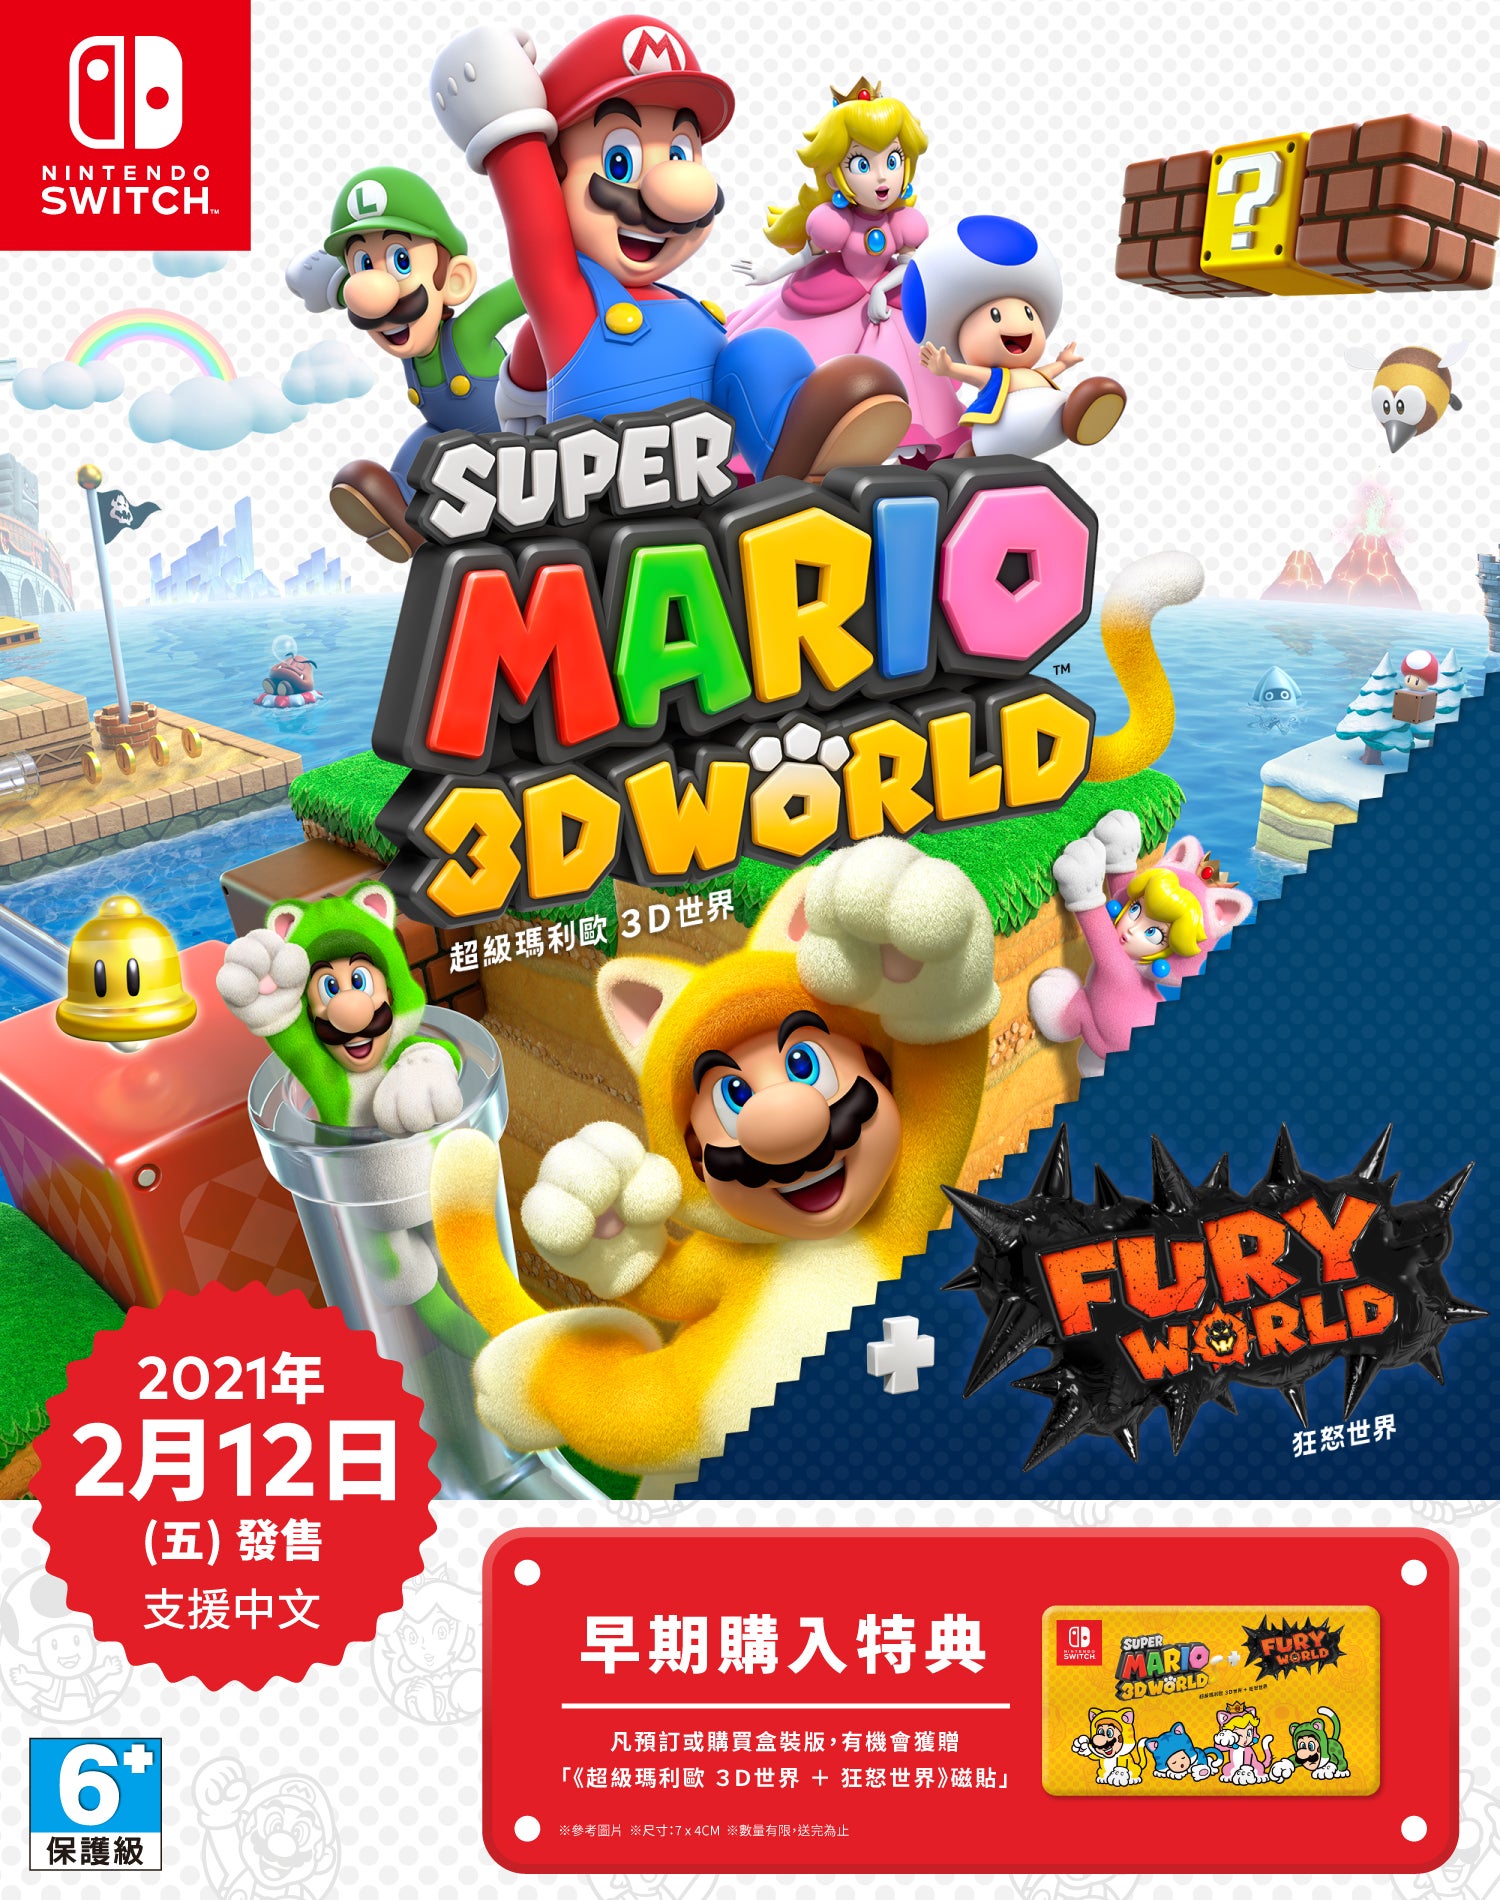 SUPER MARIO 3D WORLD Nintendo Switch Steelbook RARE LIMITED Steelcase no  game !